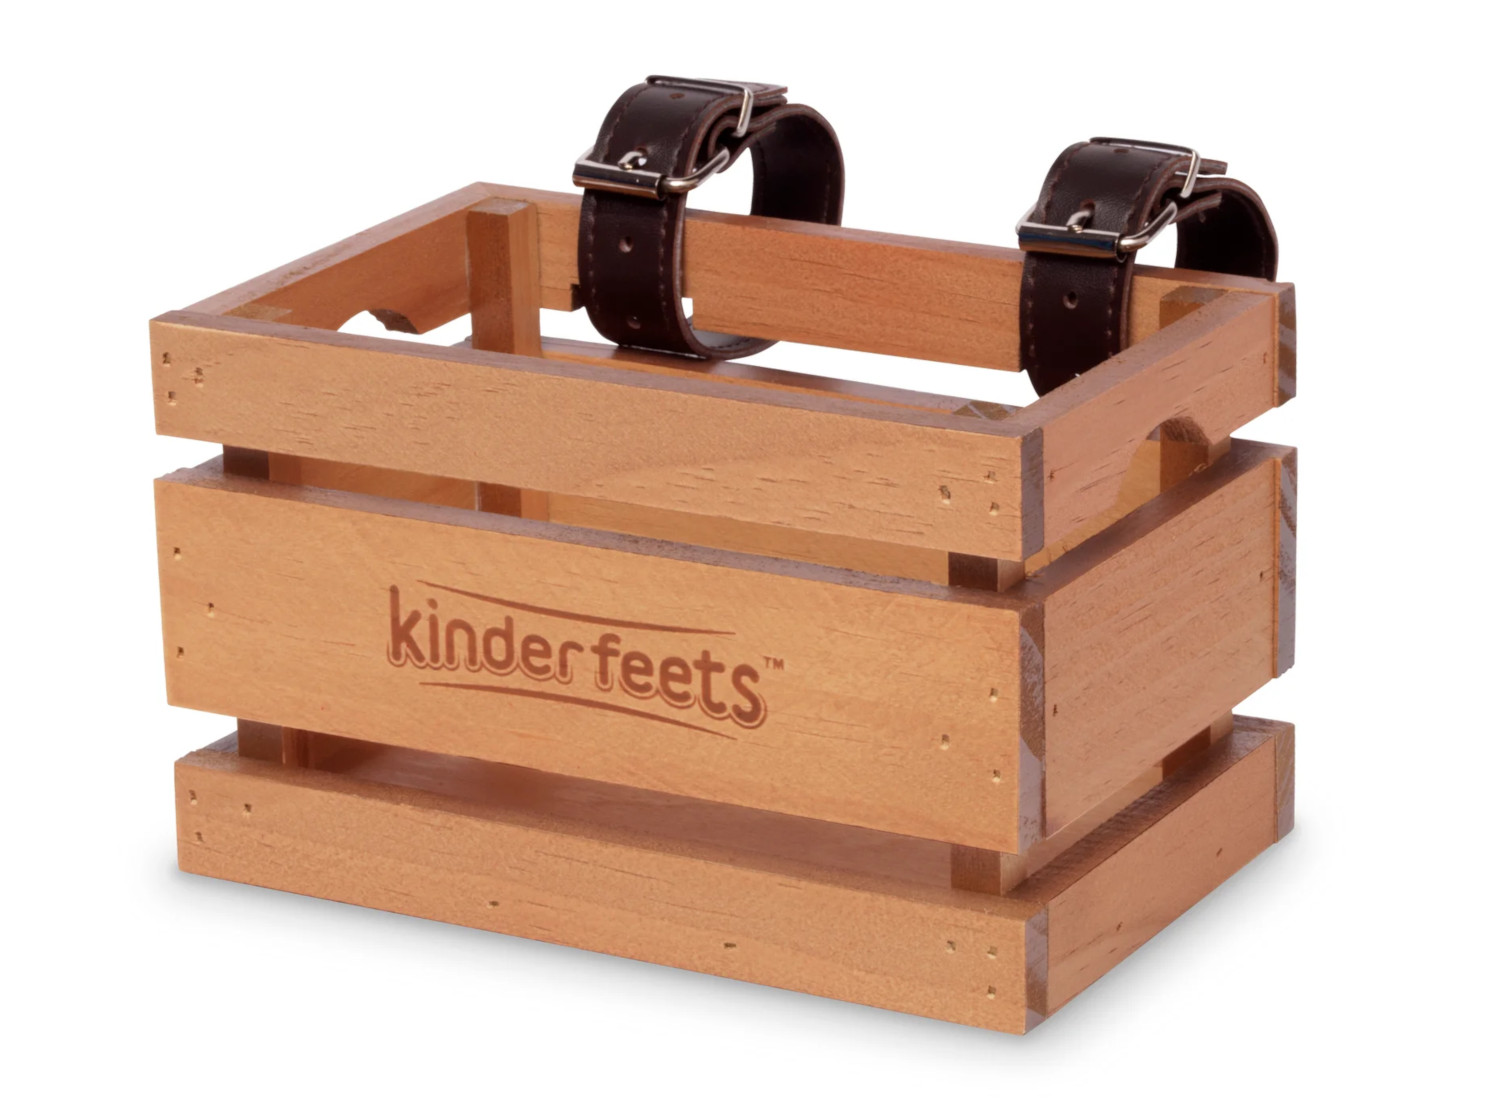 Kinderfeets Crate Wood